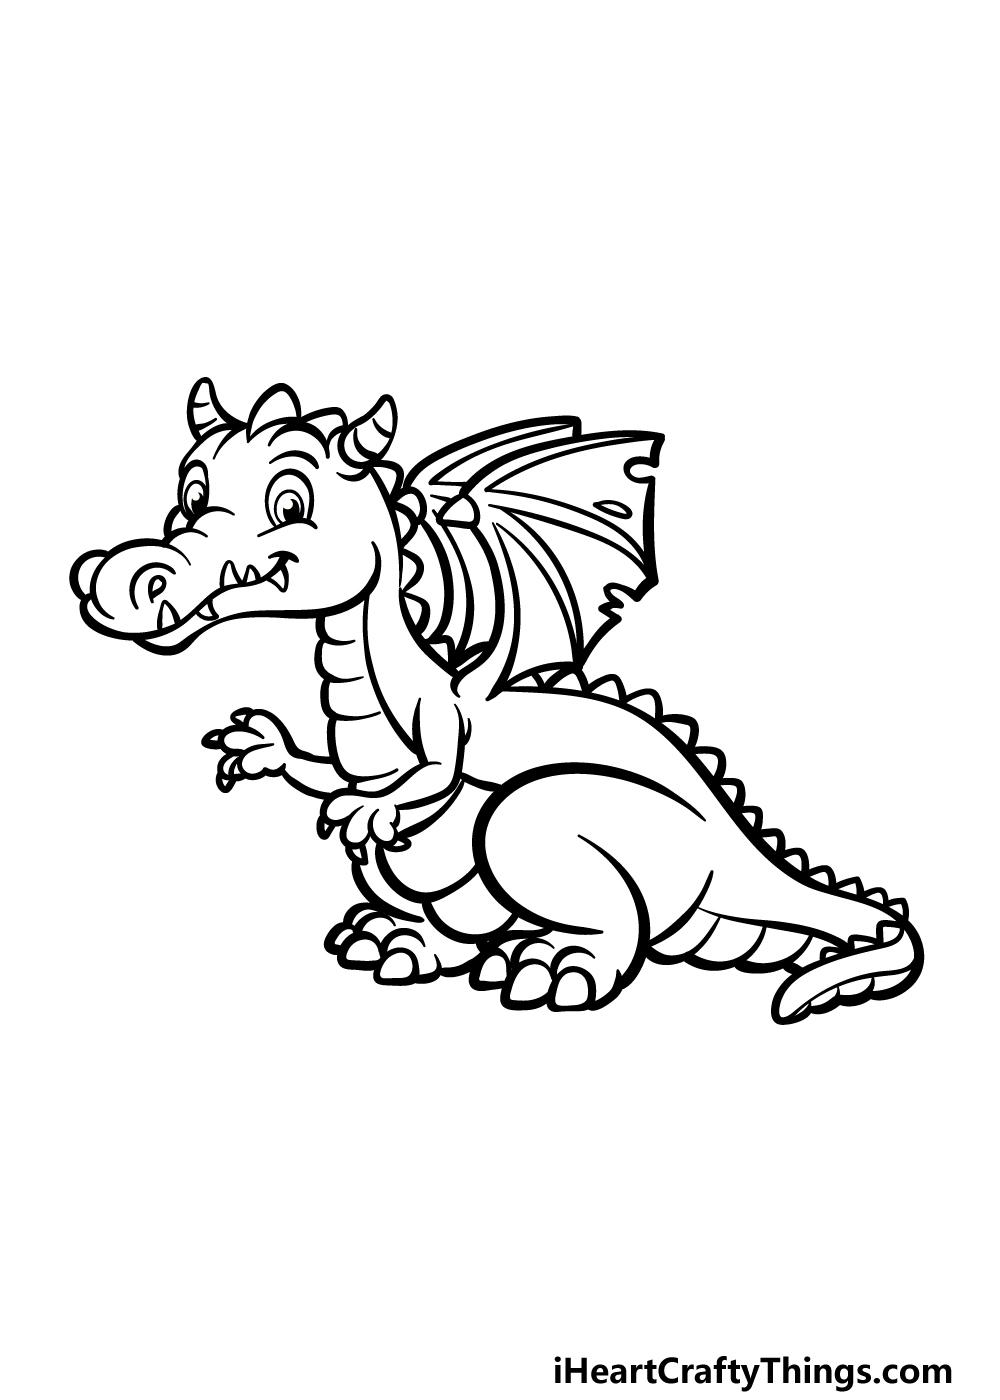 Cartoon Dragon Drawing - How To Draw A Cartoon Dragon Step By Step